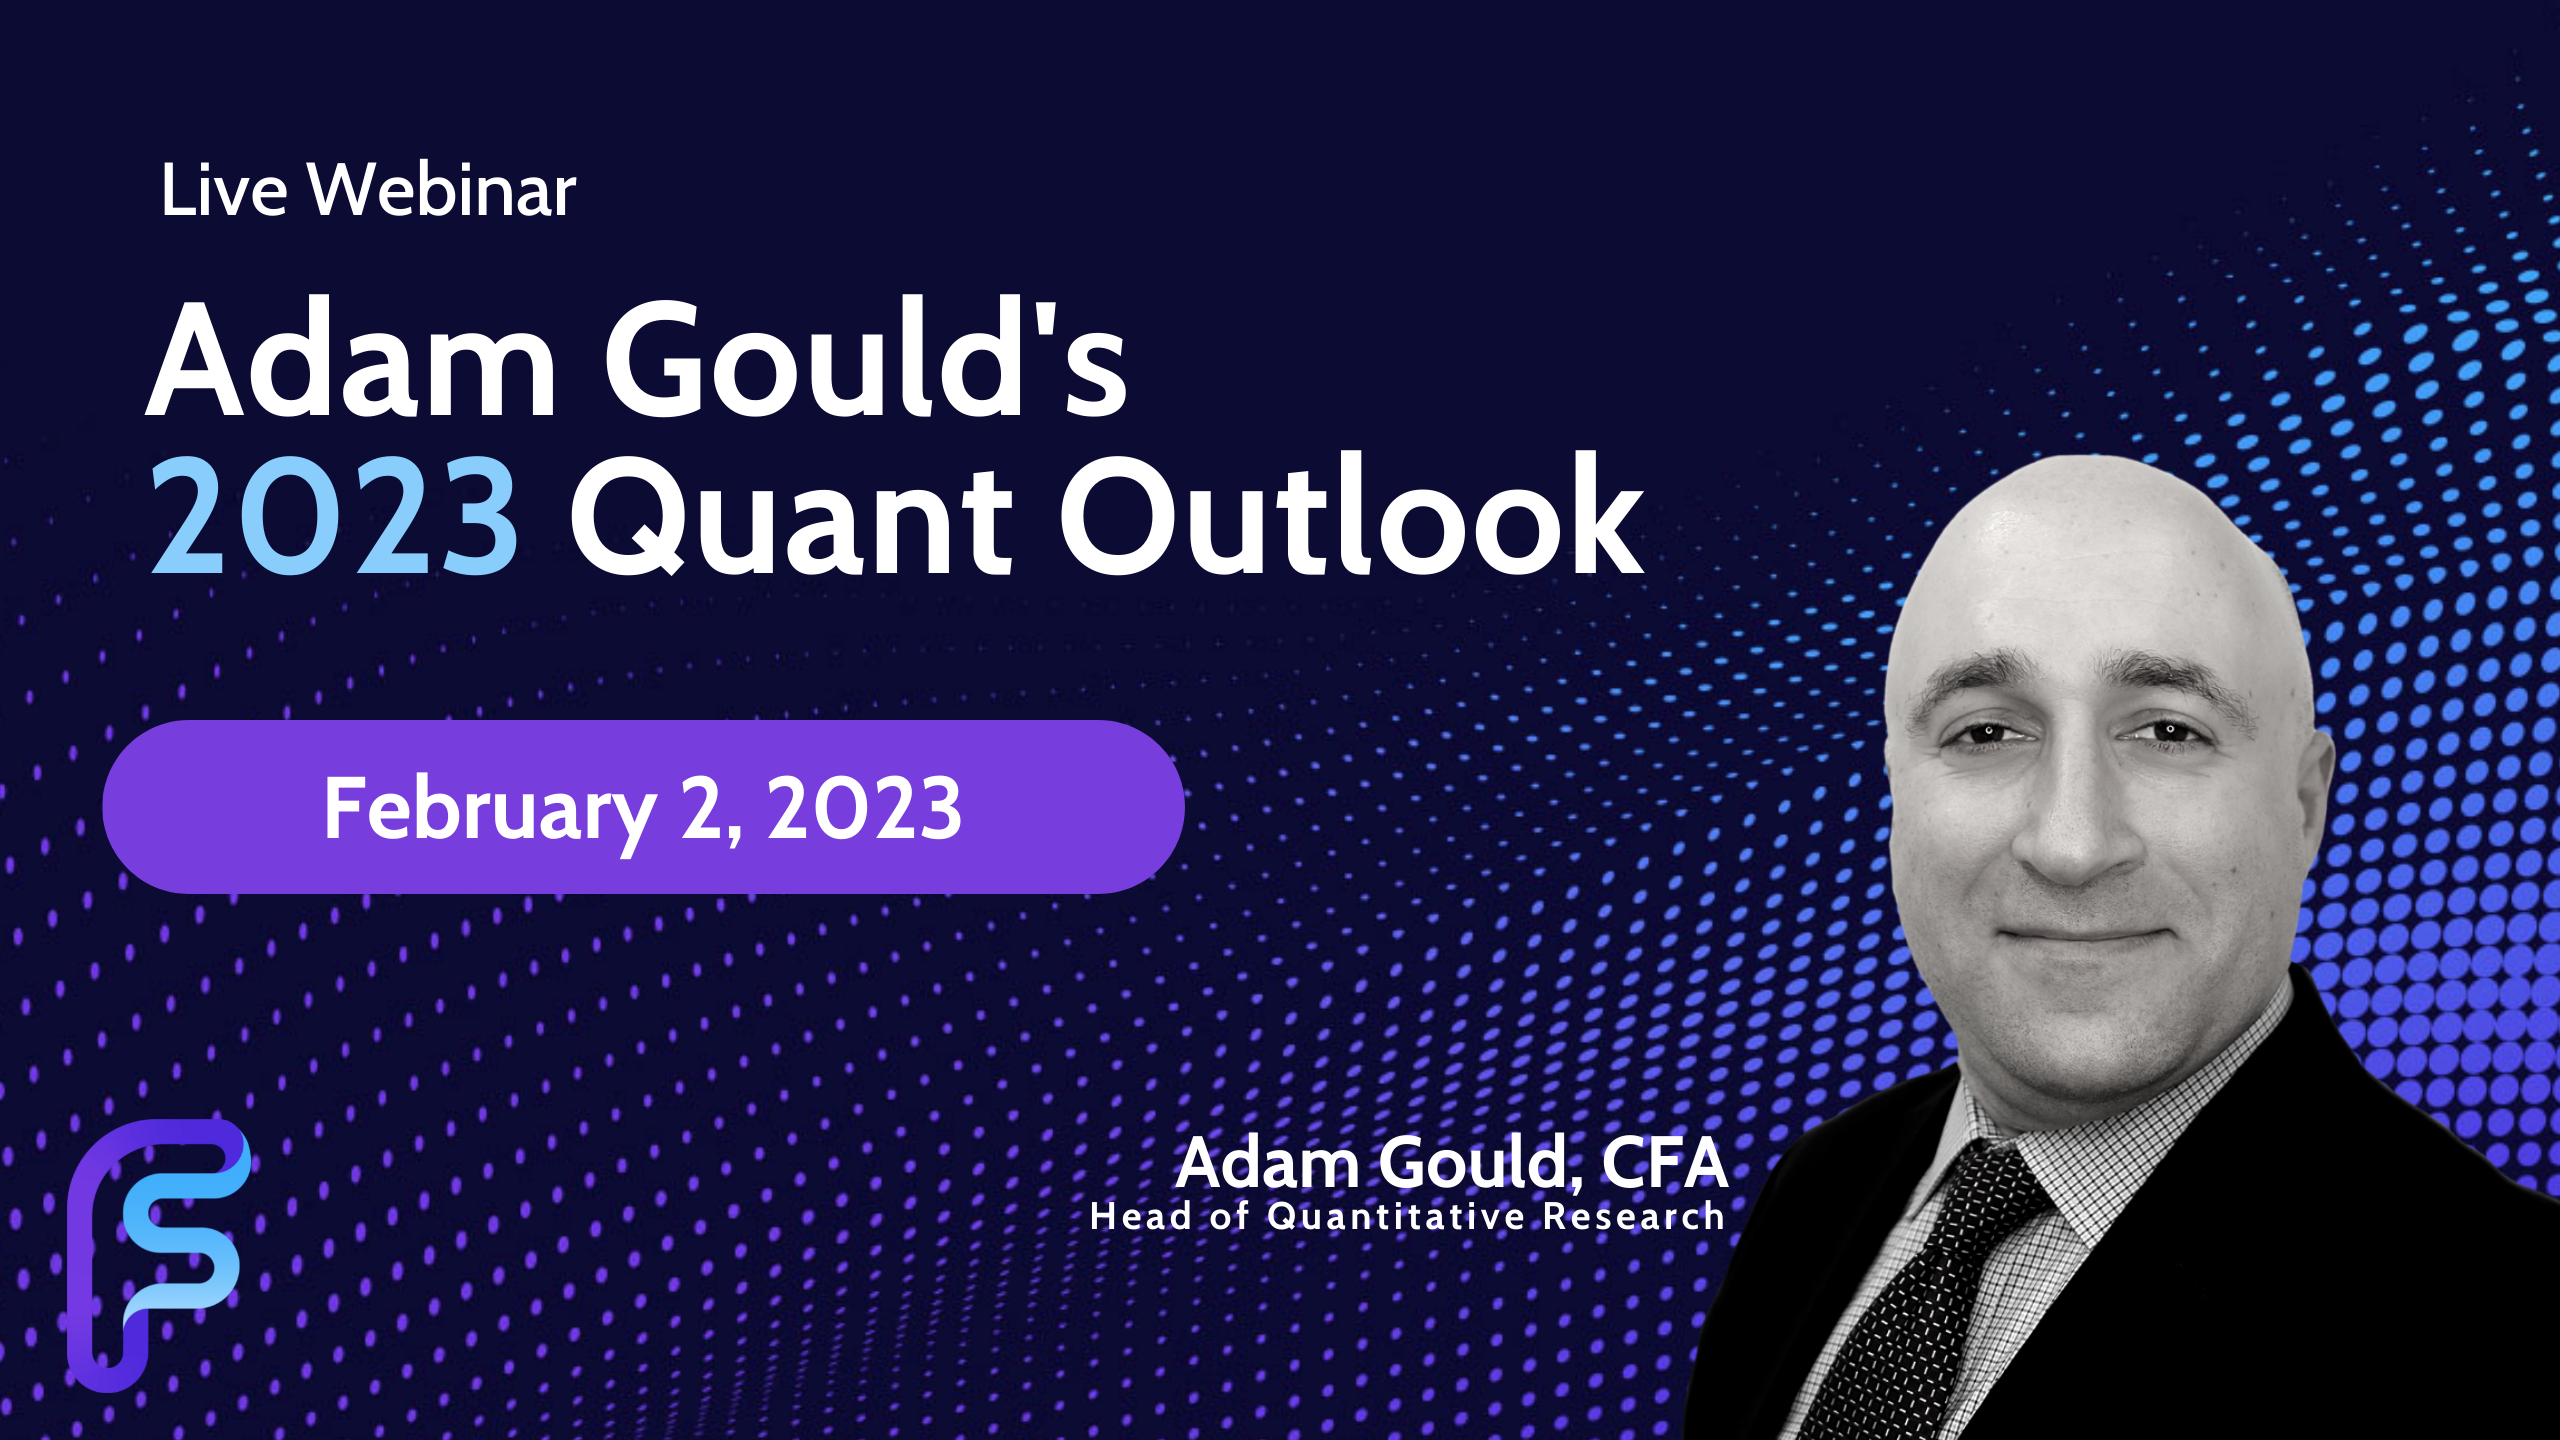 Adam Gould’s 2023 Quantitative Strategy Outlook